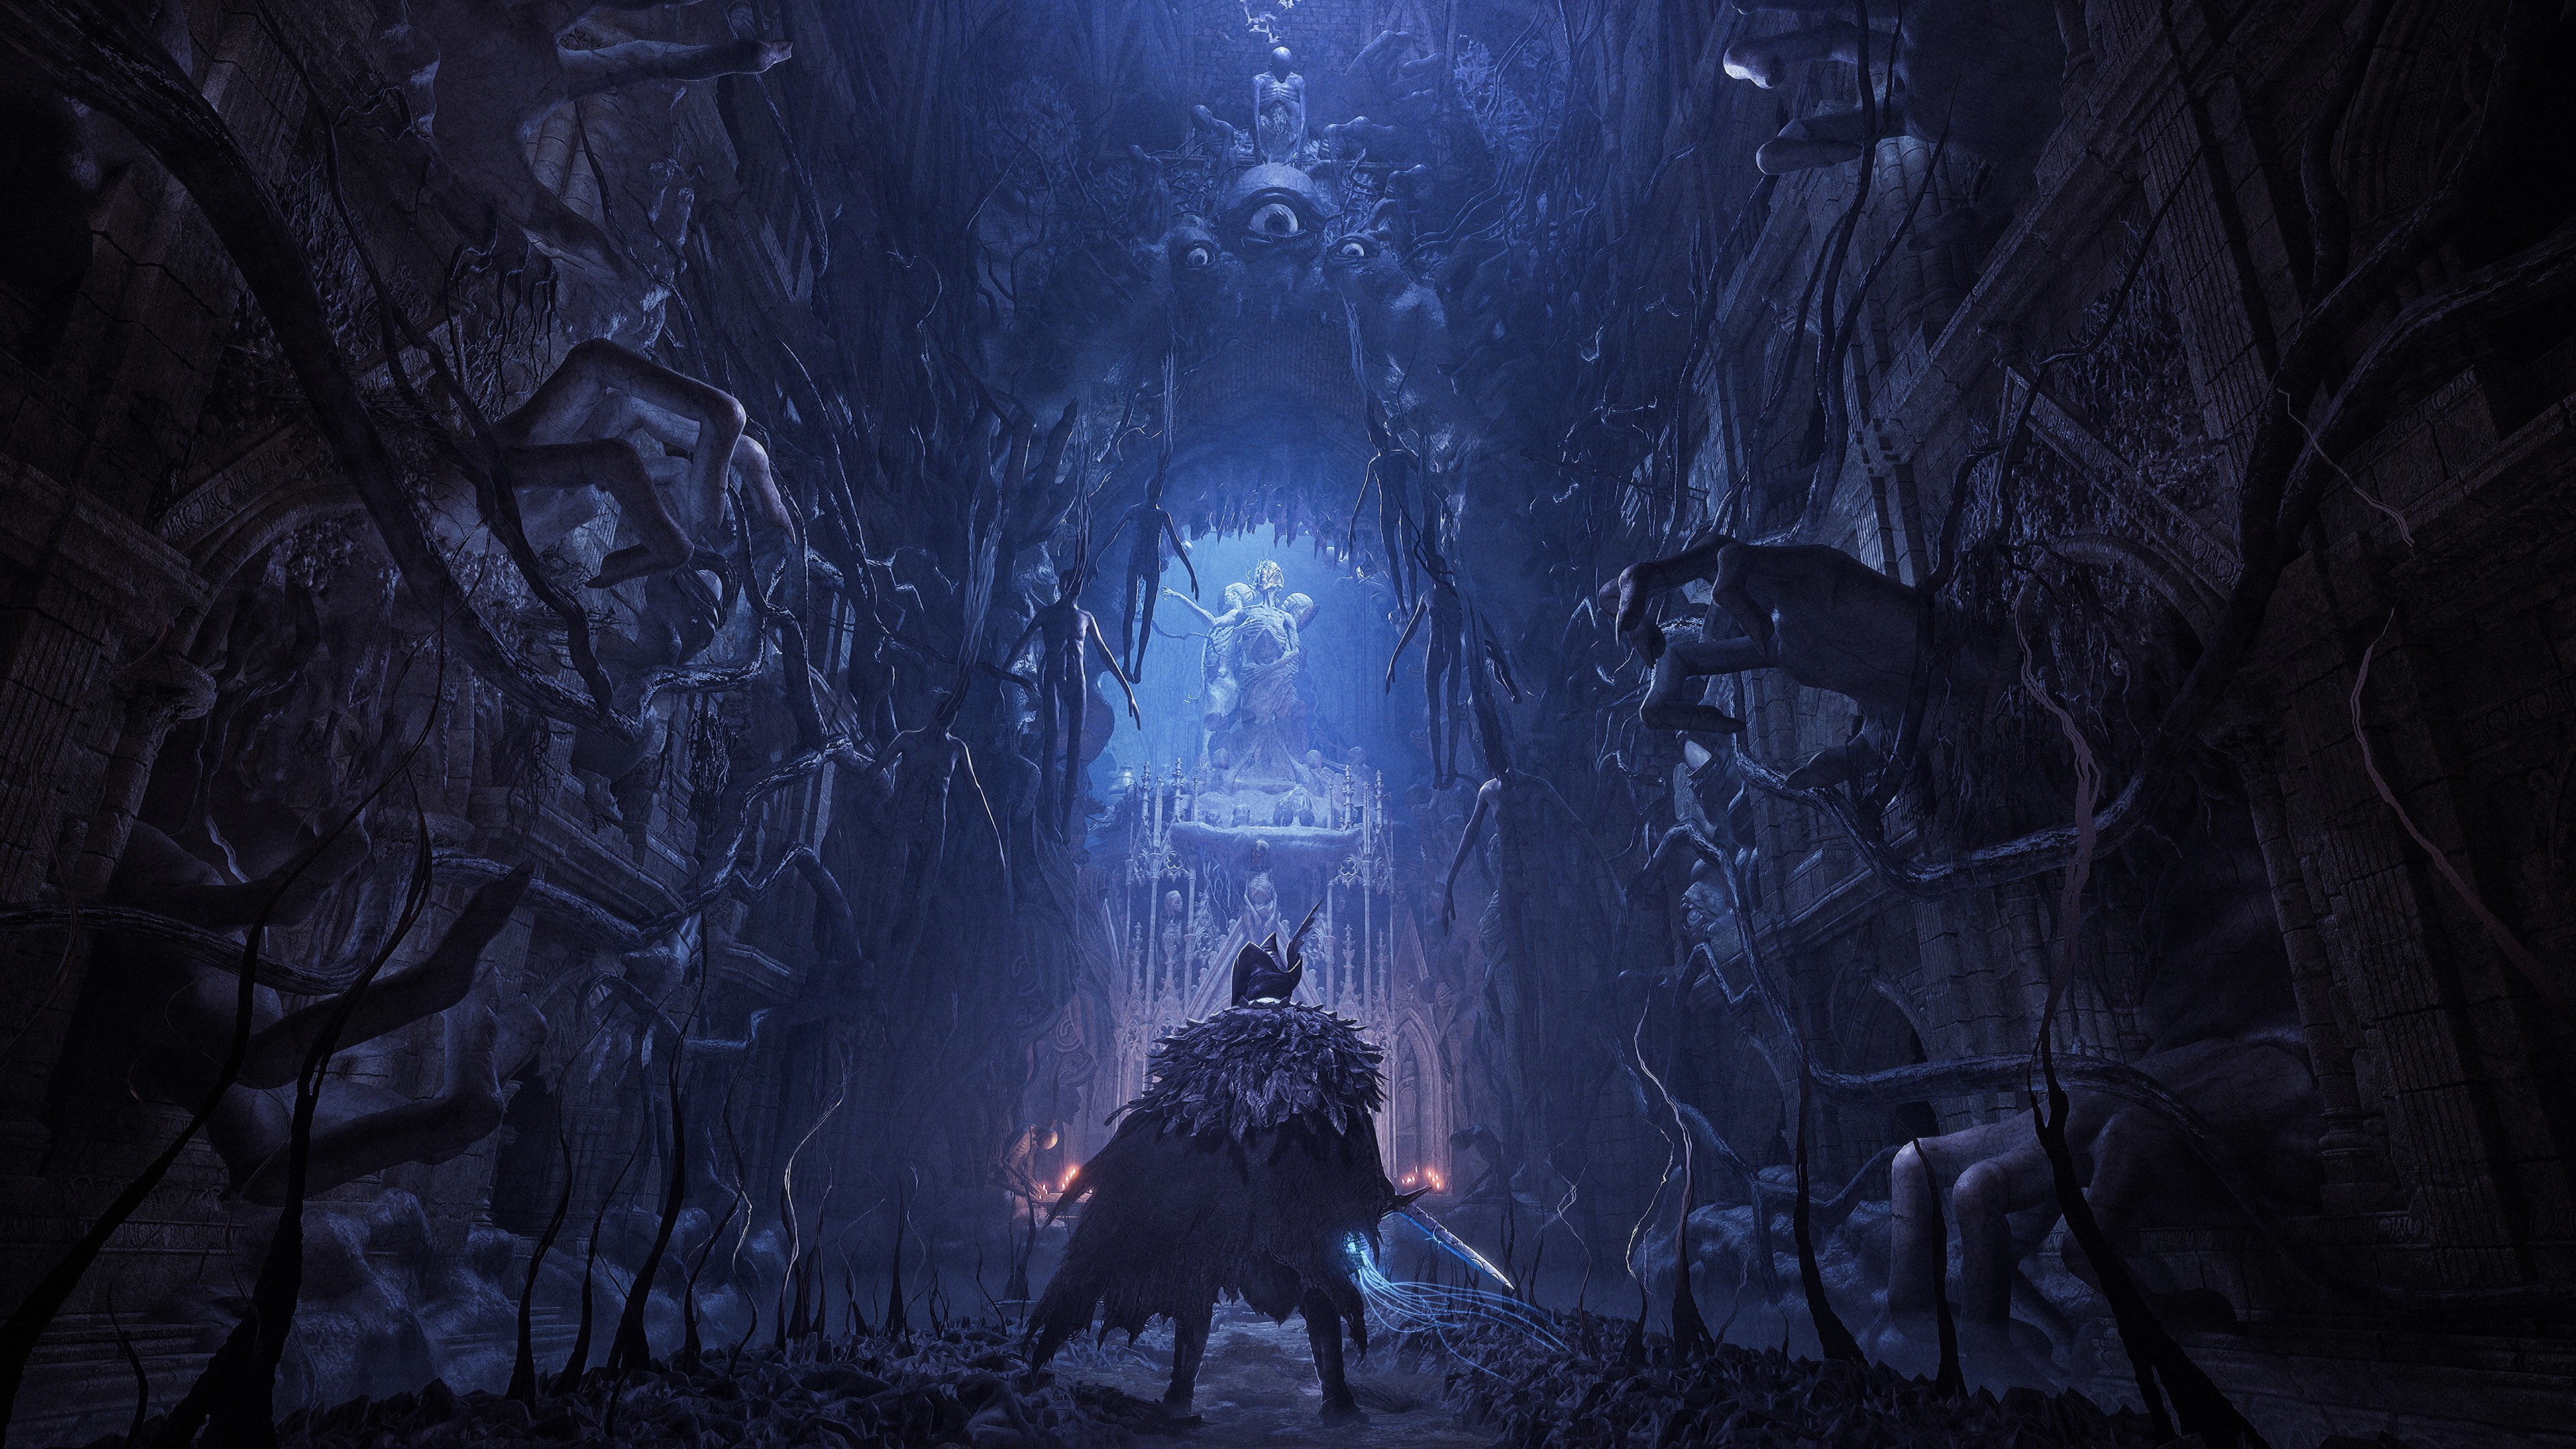 Lords Of The Fallen (2023) + Pre-Order Bonus DLC CN Steam CD Key